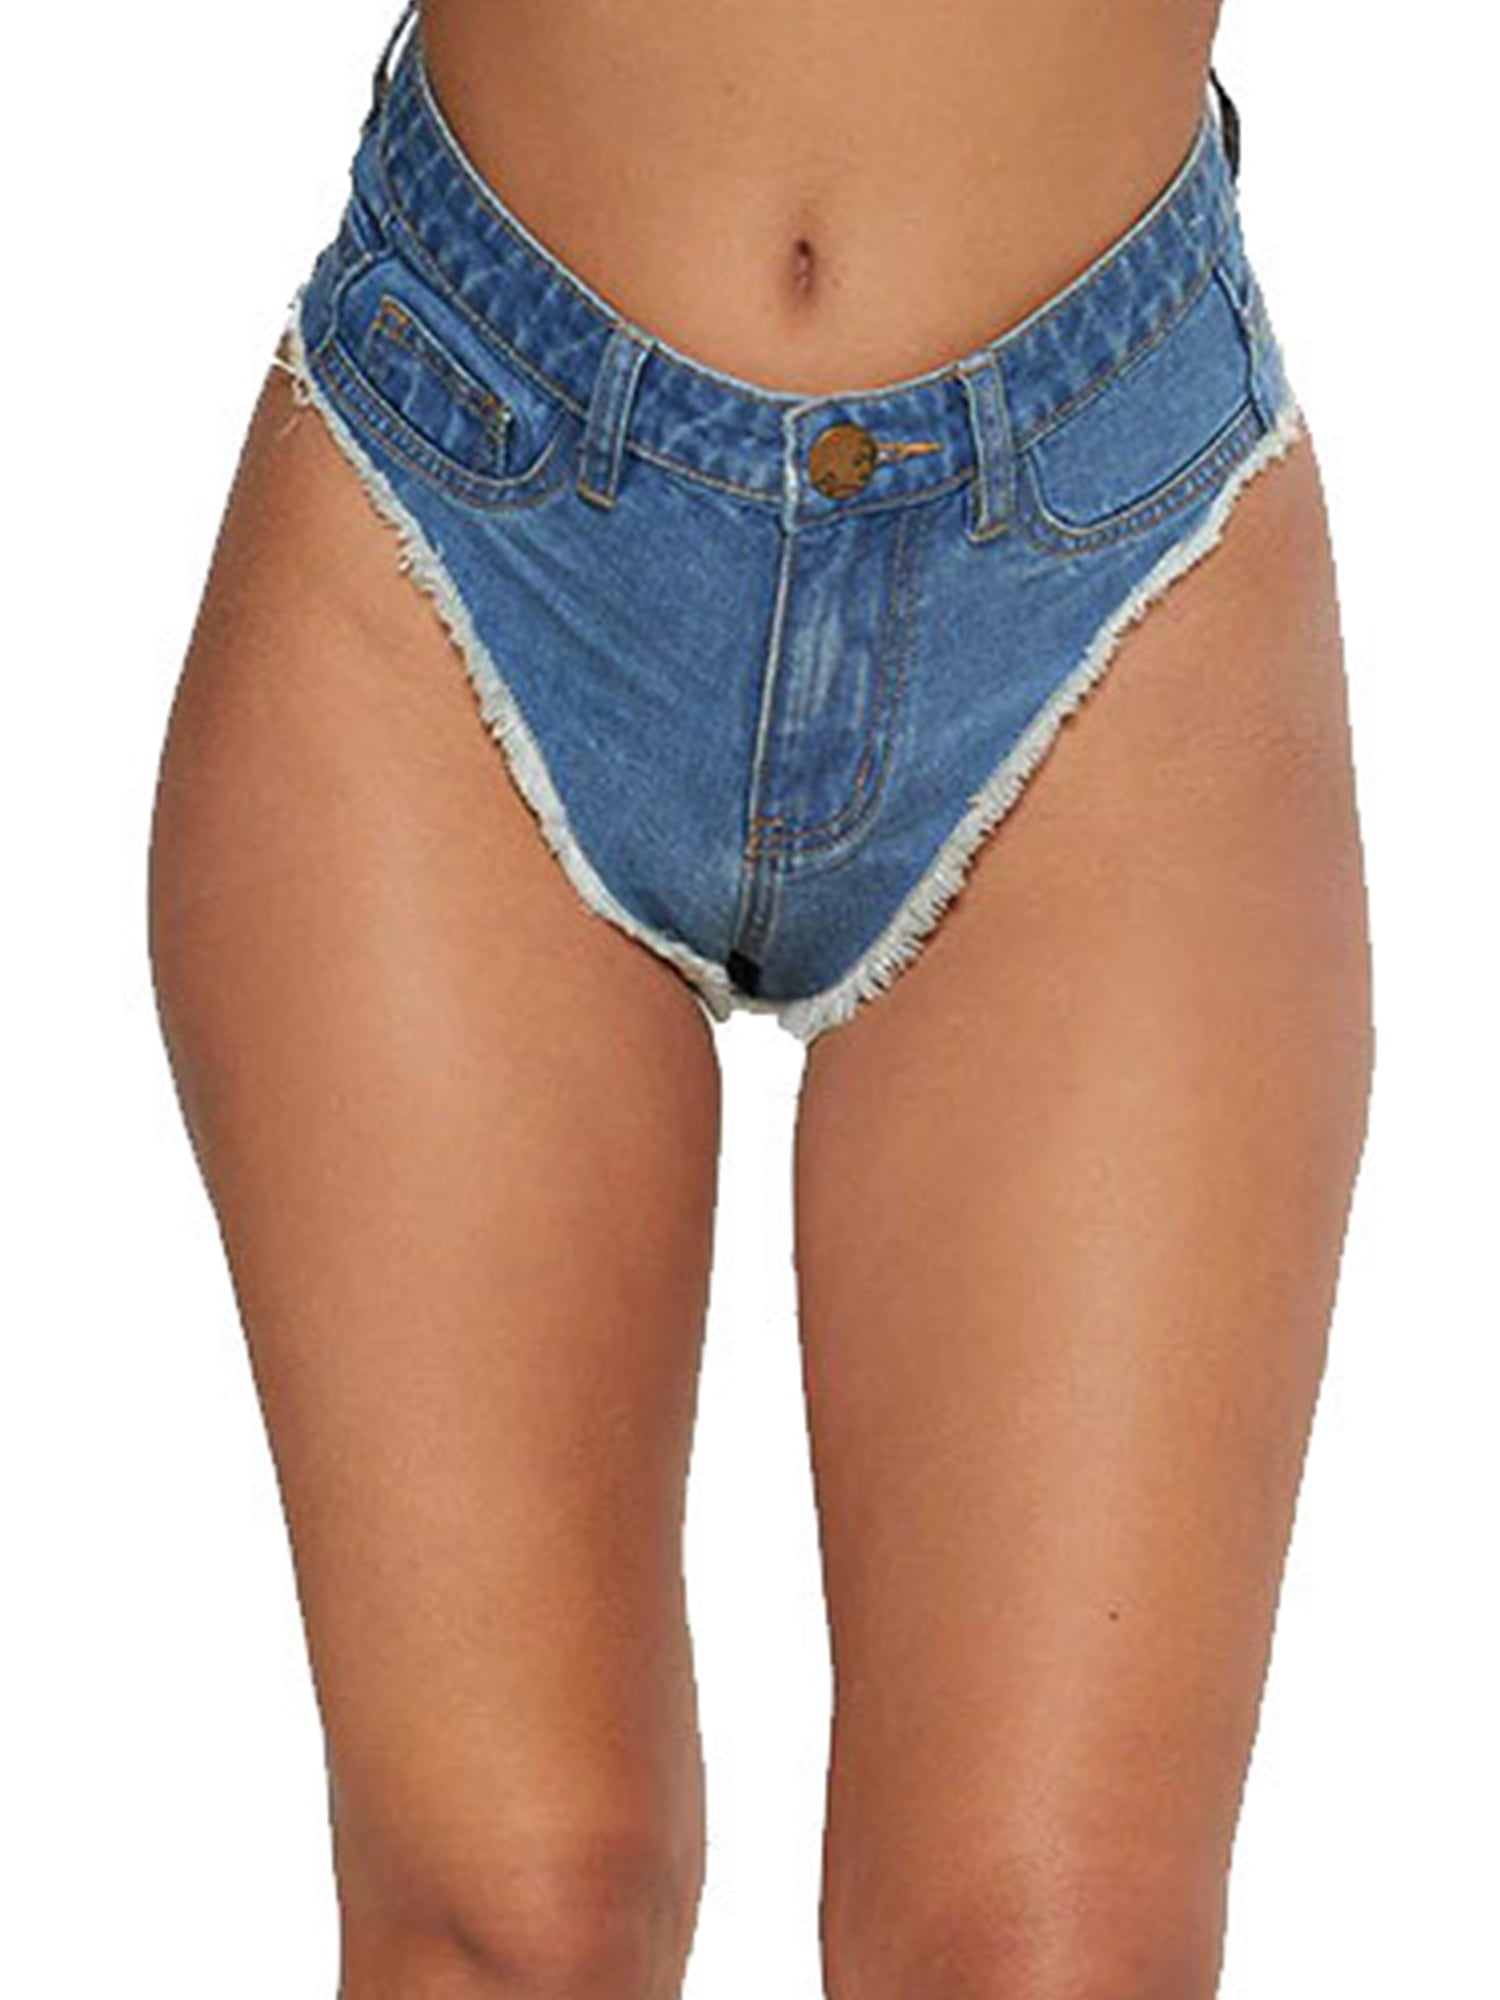 Jeans Shorts,Womens Hot Pants Juniors Body Enhancing Denim Shorts